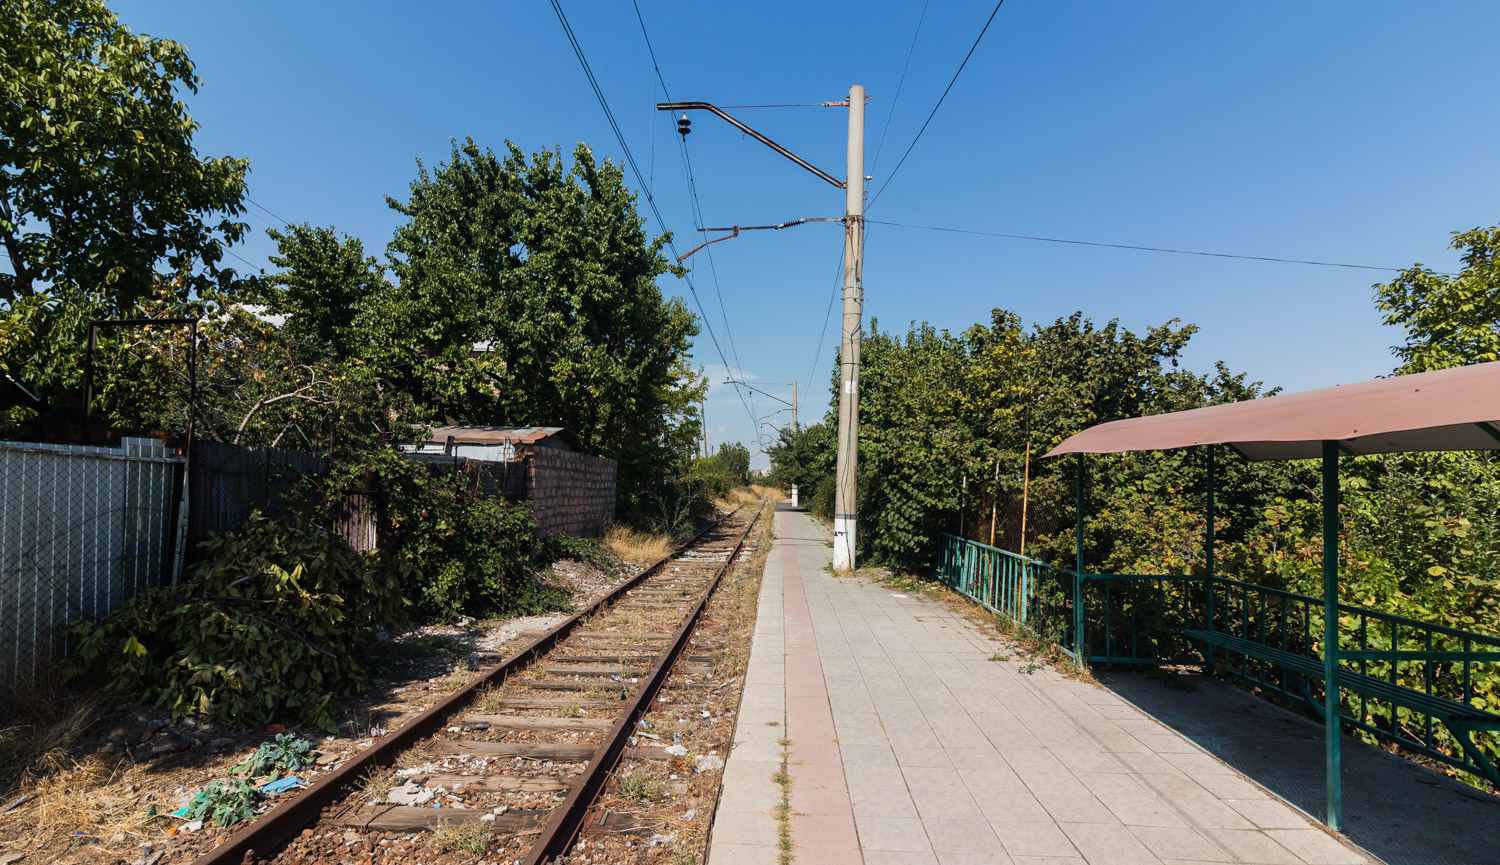 Armenian Railways — Stations